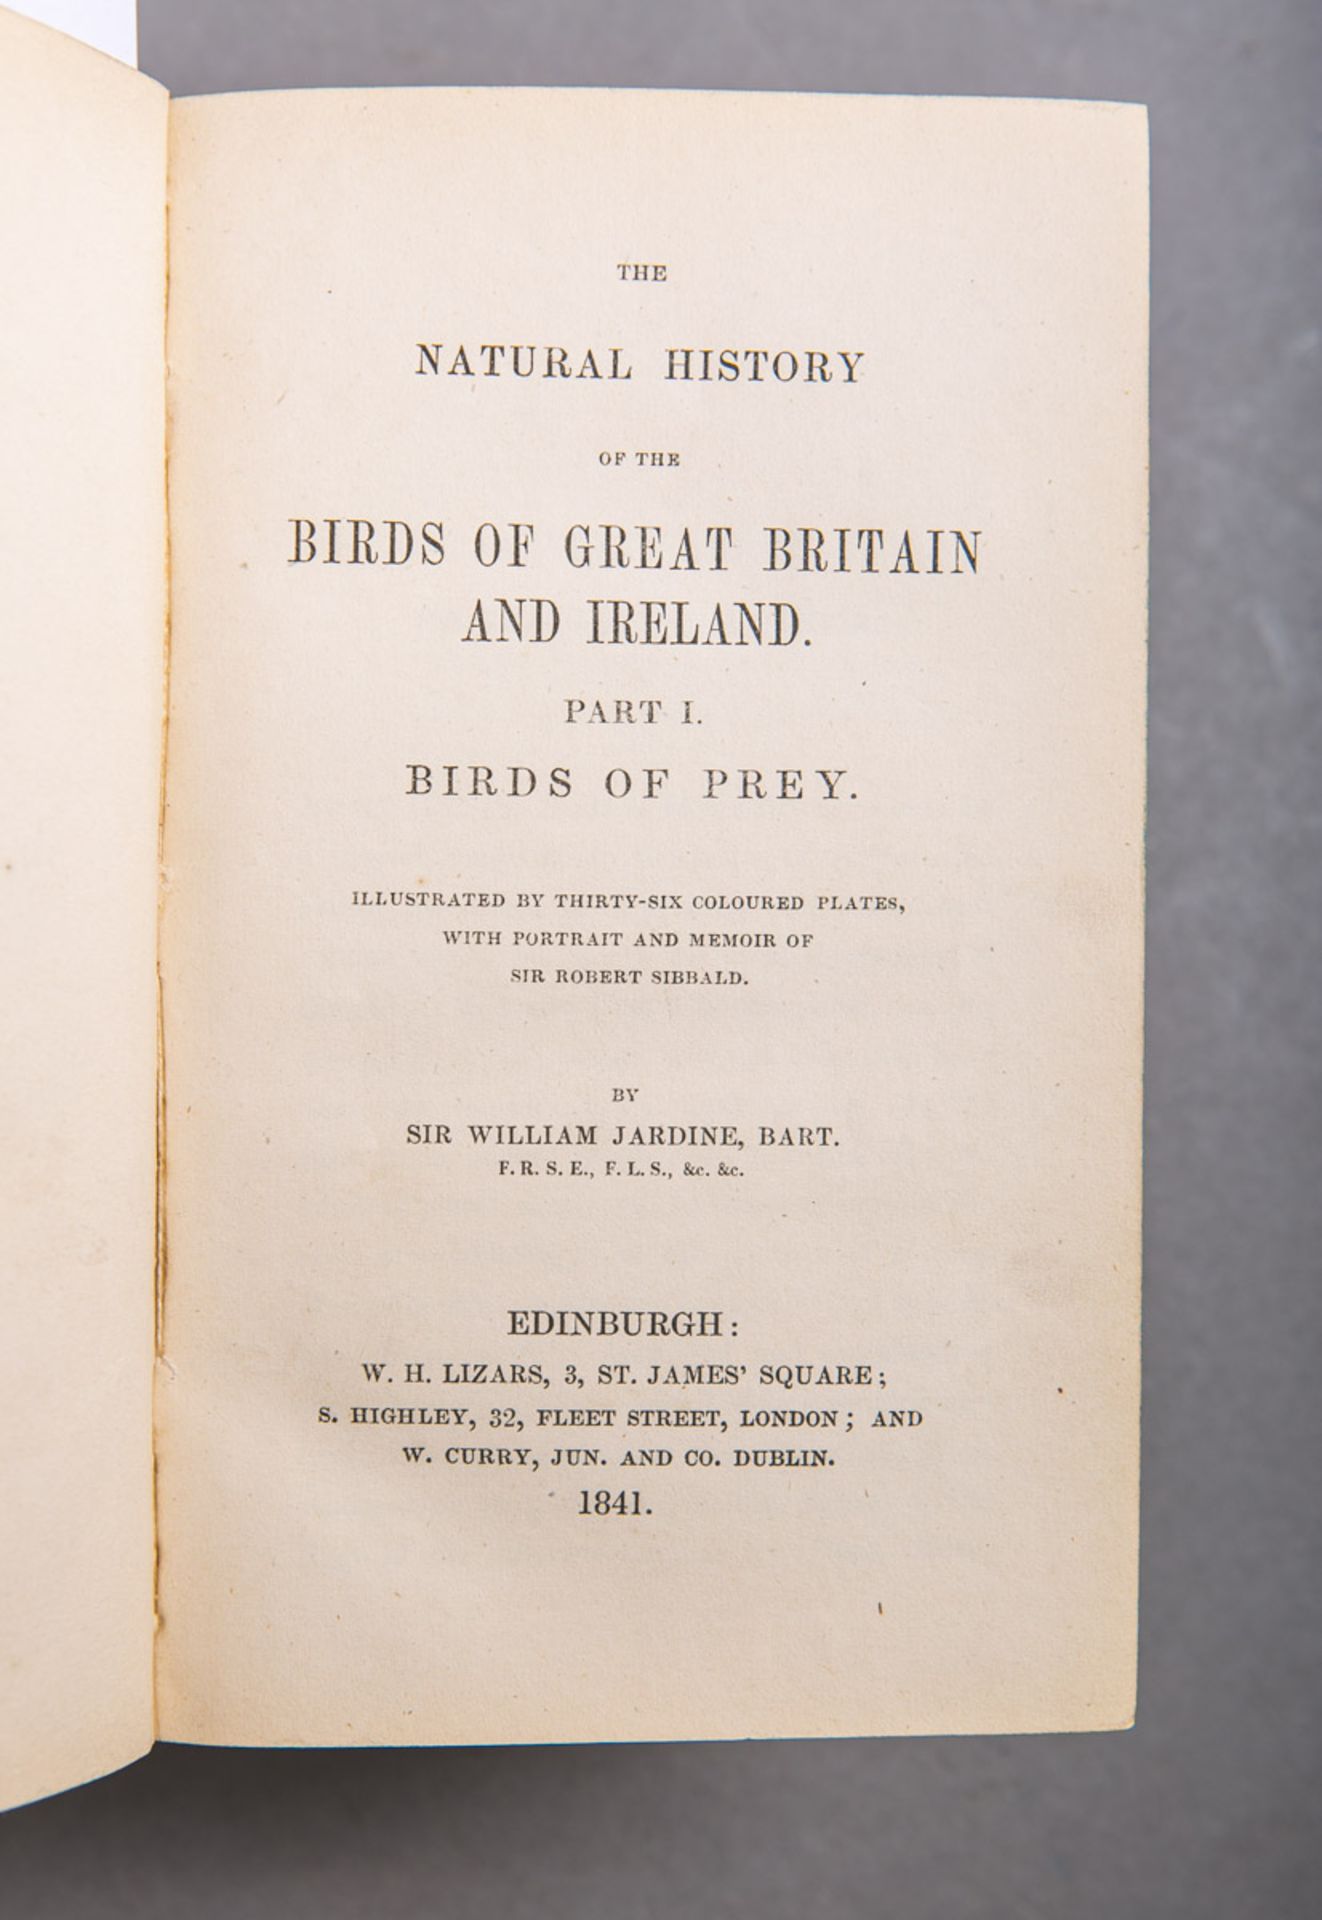 Sir William Jardine, "The Birds of great Britain and Ireland"